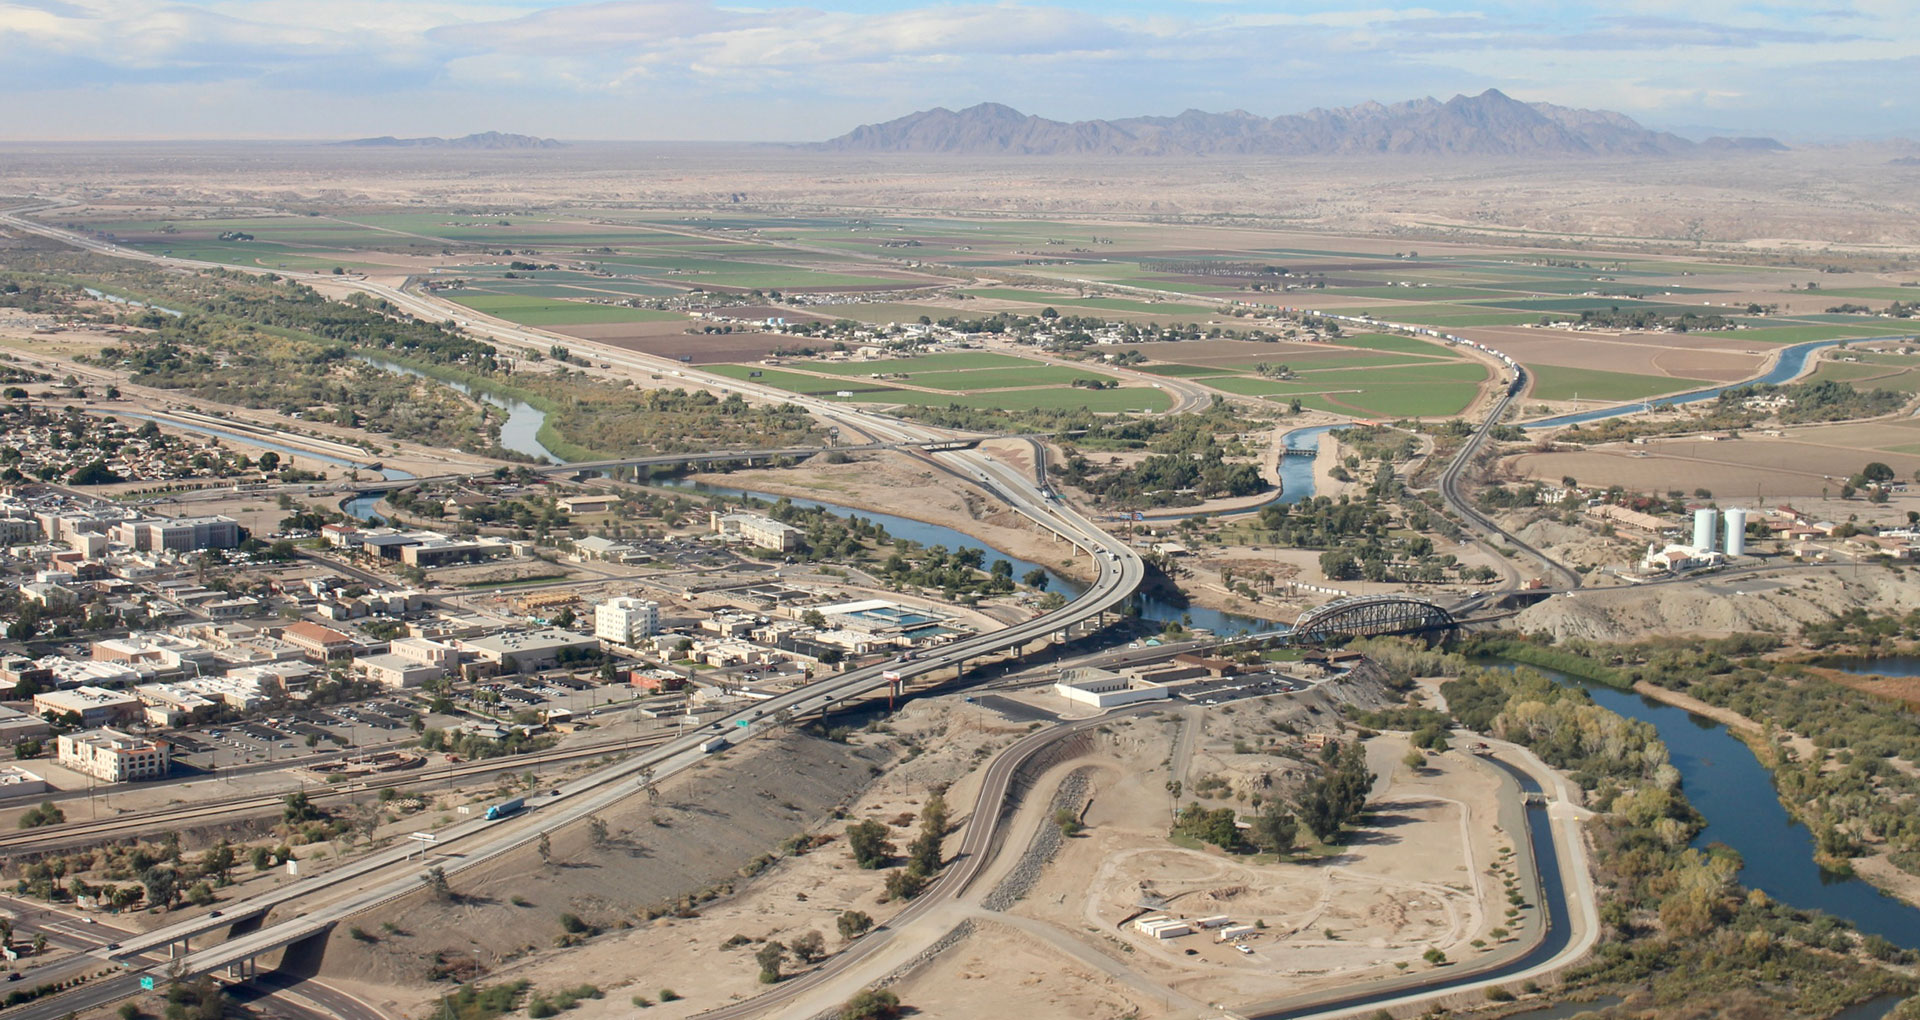 The Colorado River weaves through the Sonoran desert near Yuma, Arizona. 